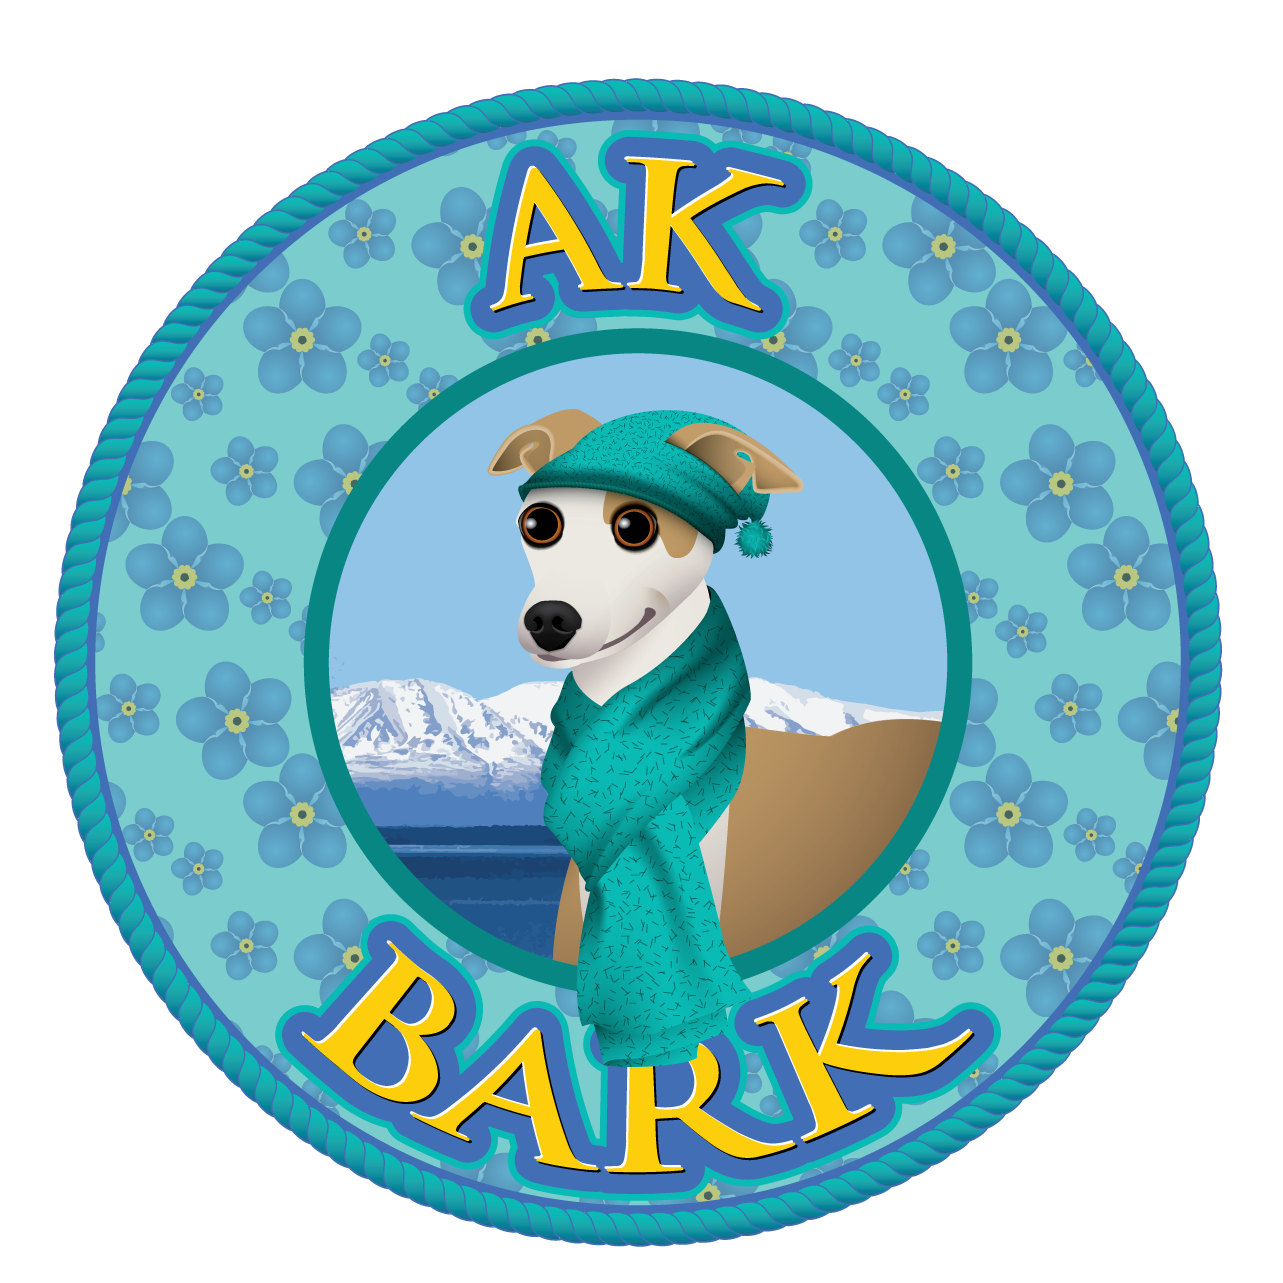 Company logo of AK Bark